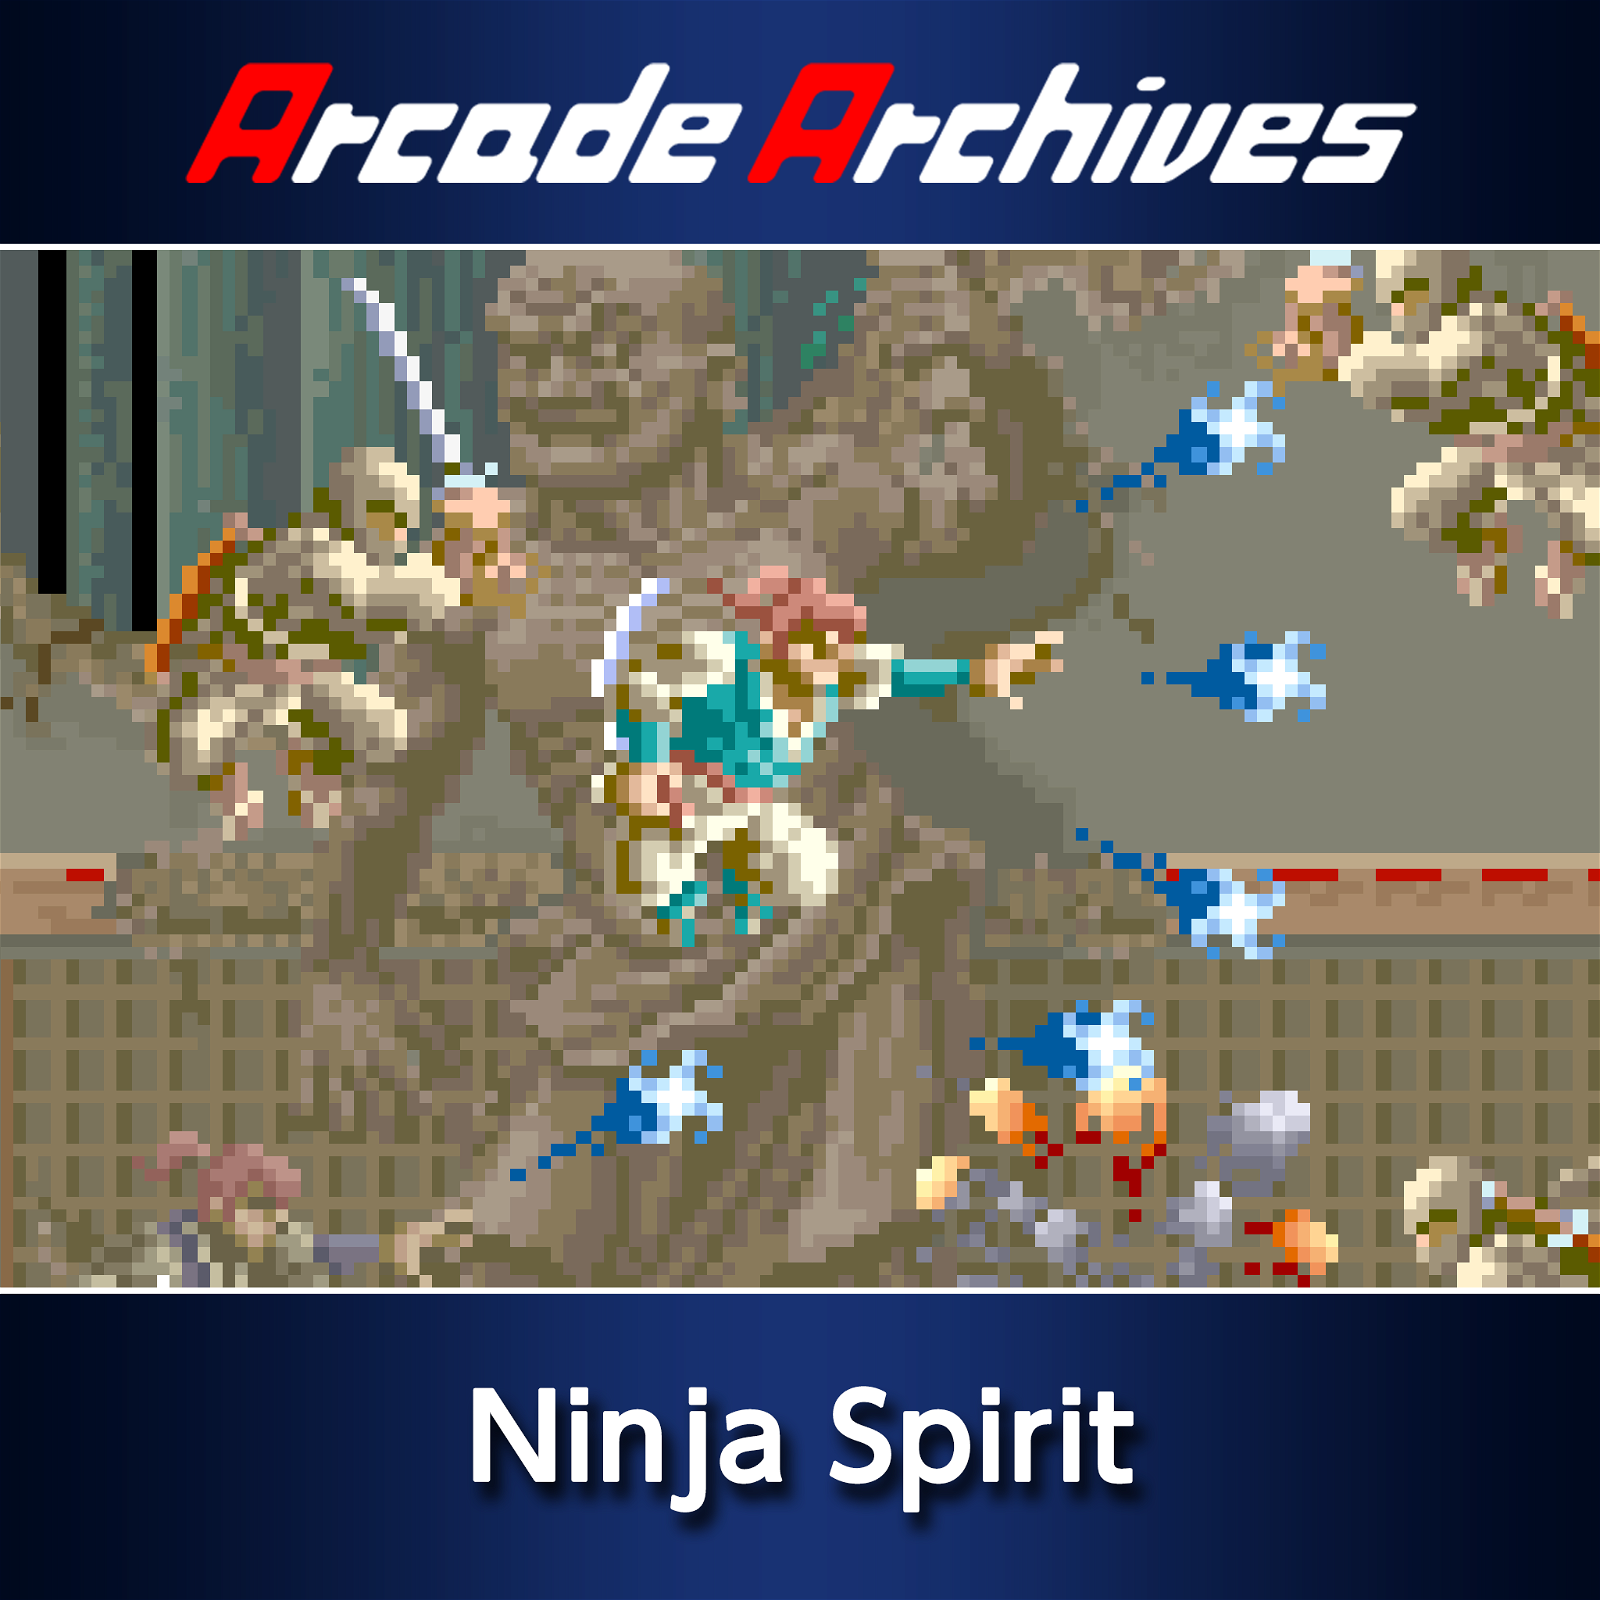 Image of Arcade Archives Ninja Spirit